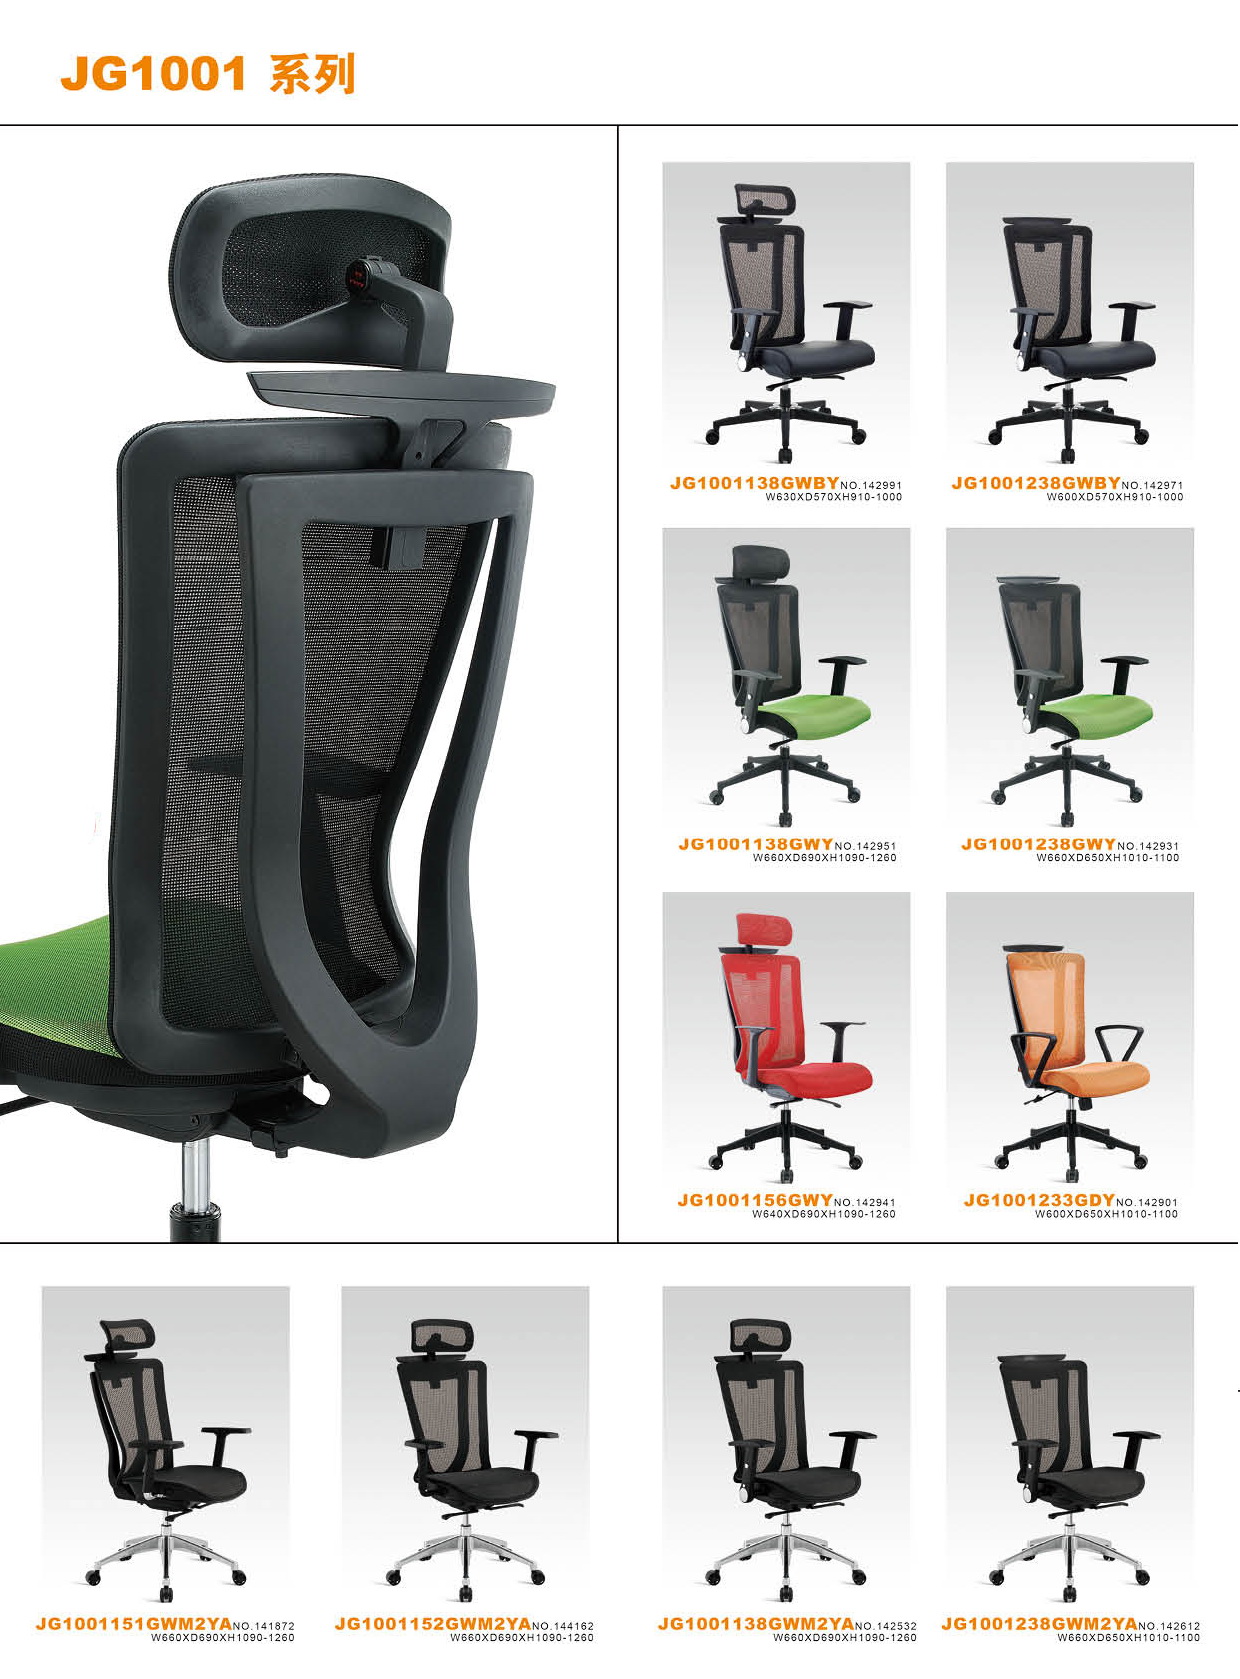 JG1001 Alpi Series Office Chair